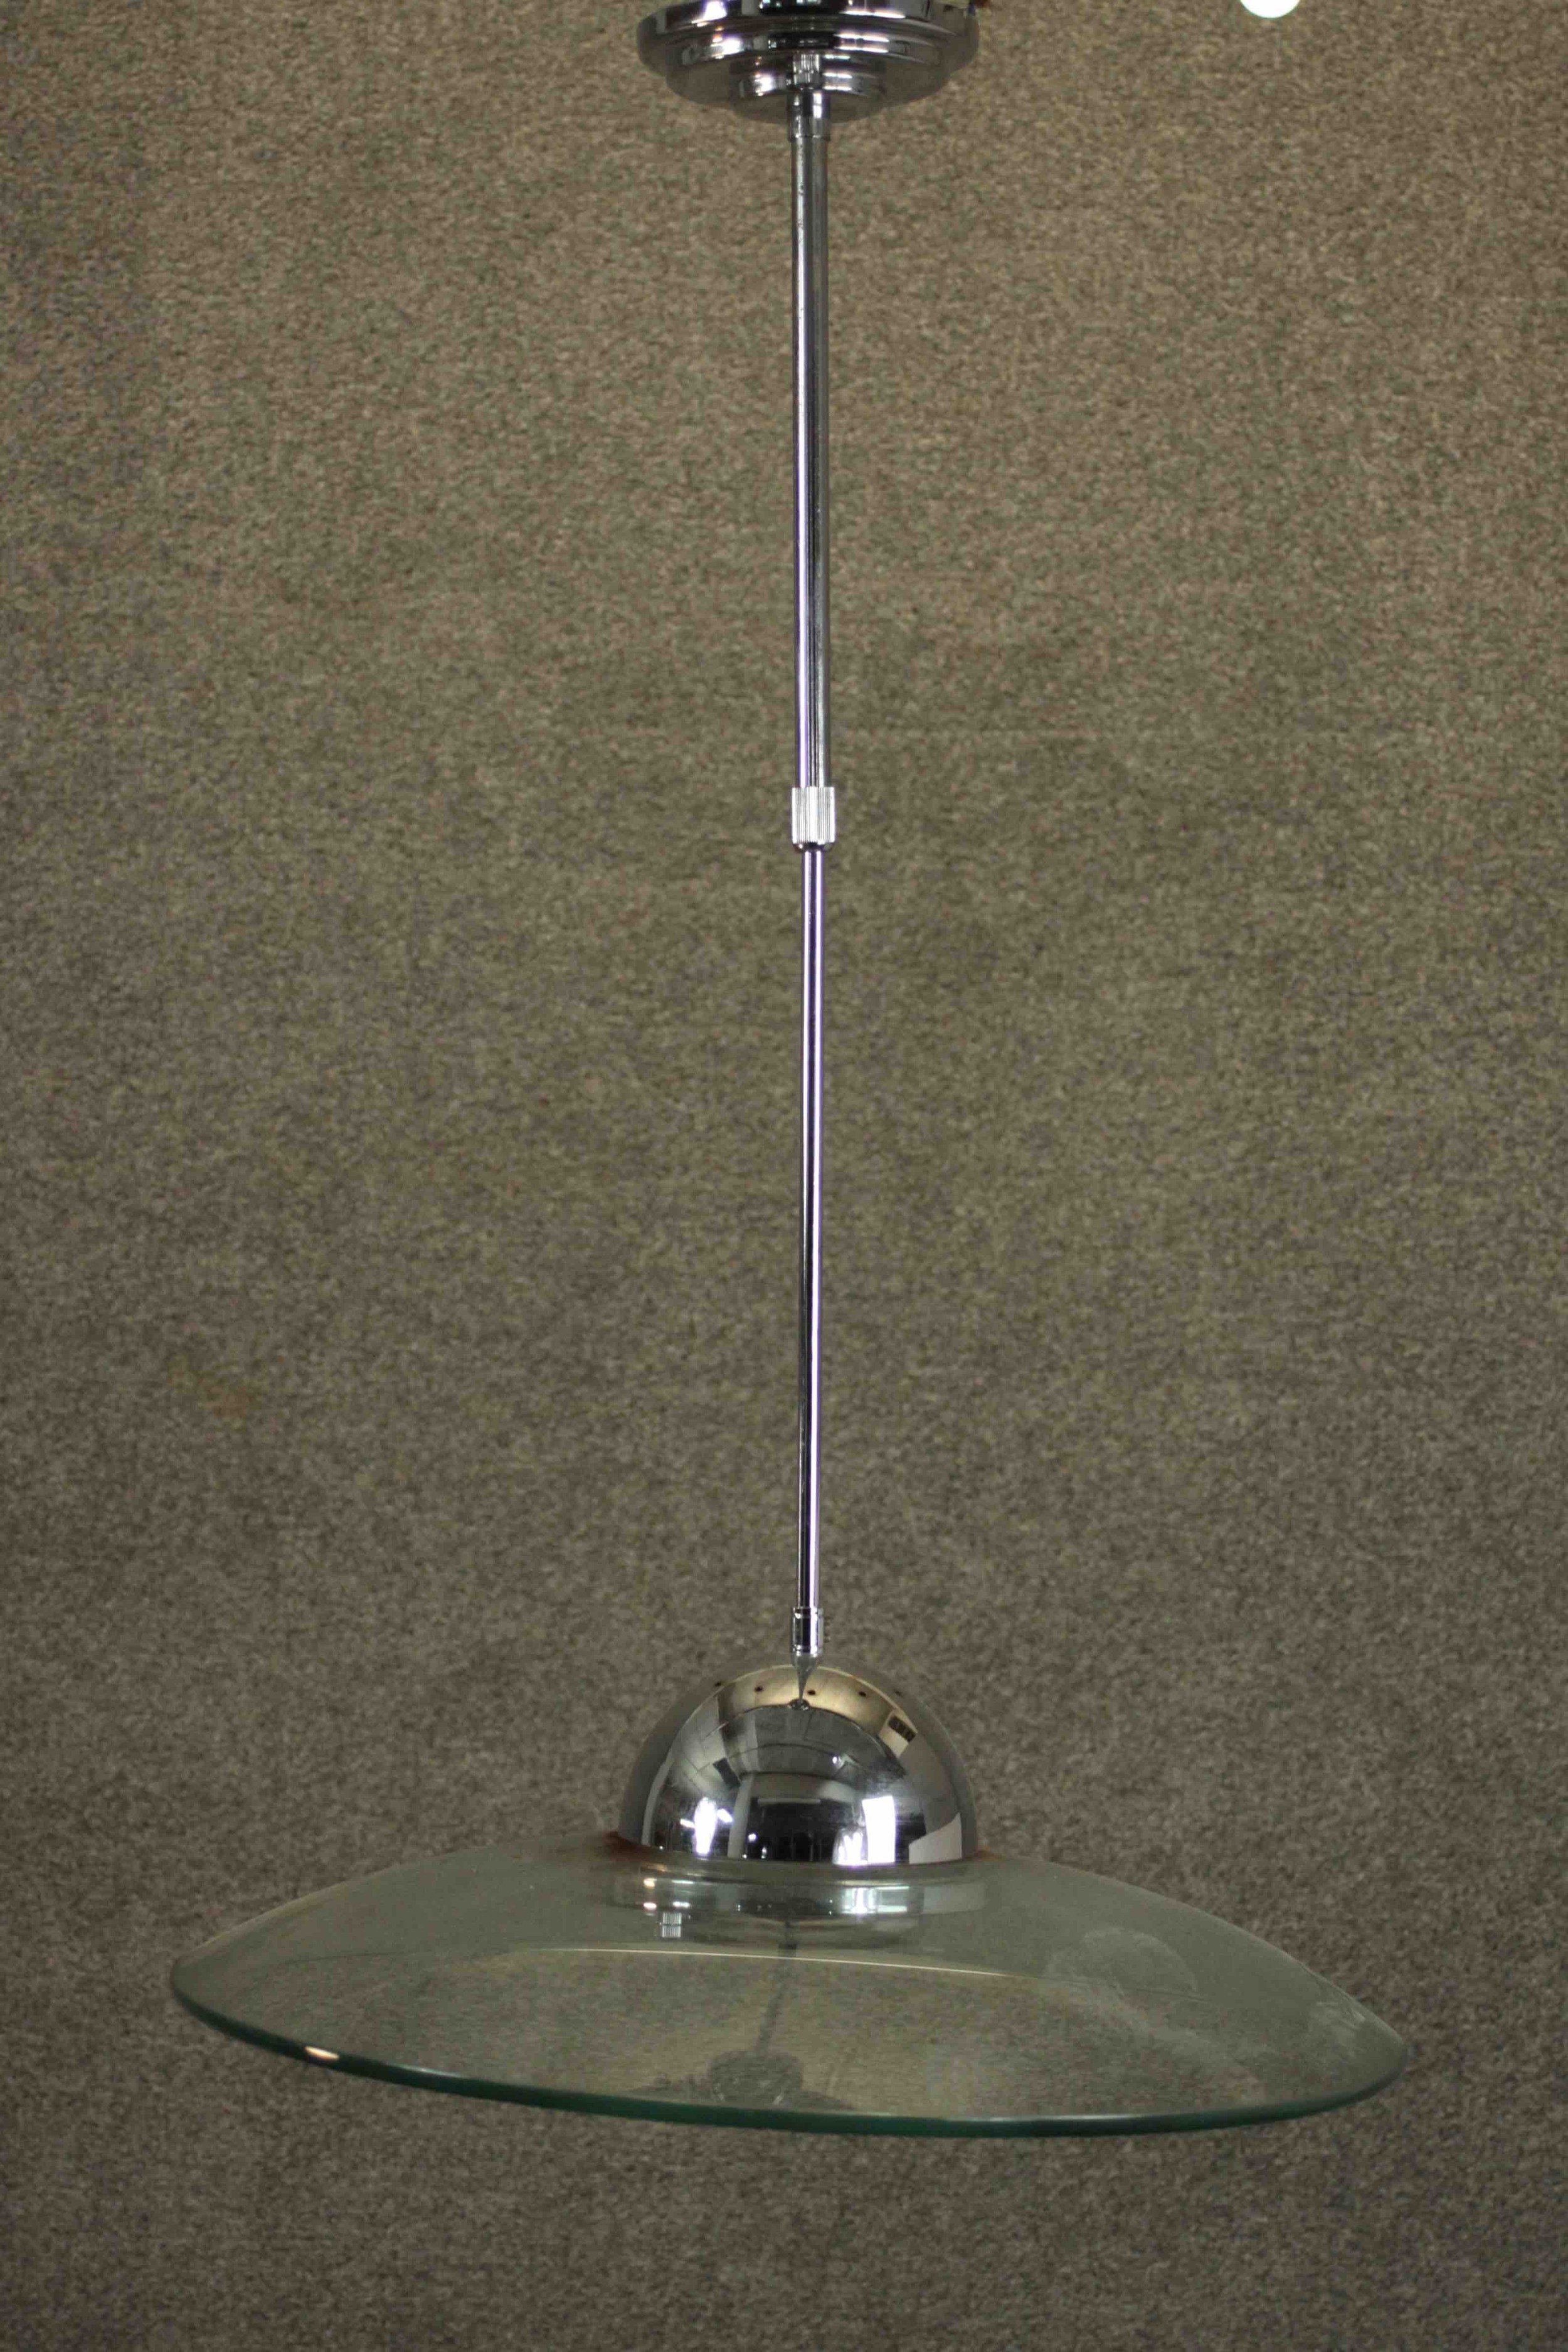 DAR Lighting; A Hemisphere 1 flying saucer style pendant light, with a telescopic chrome stem,